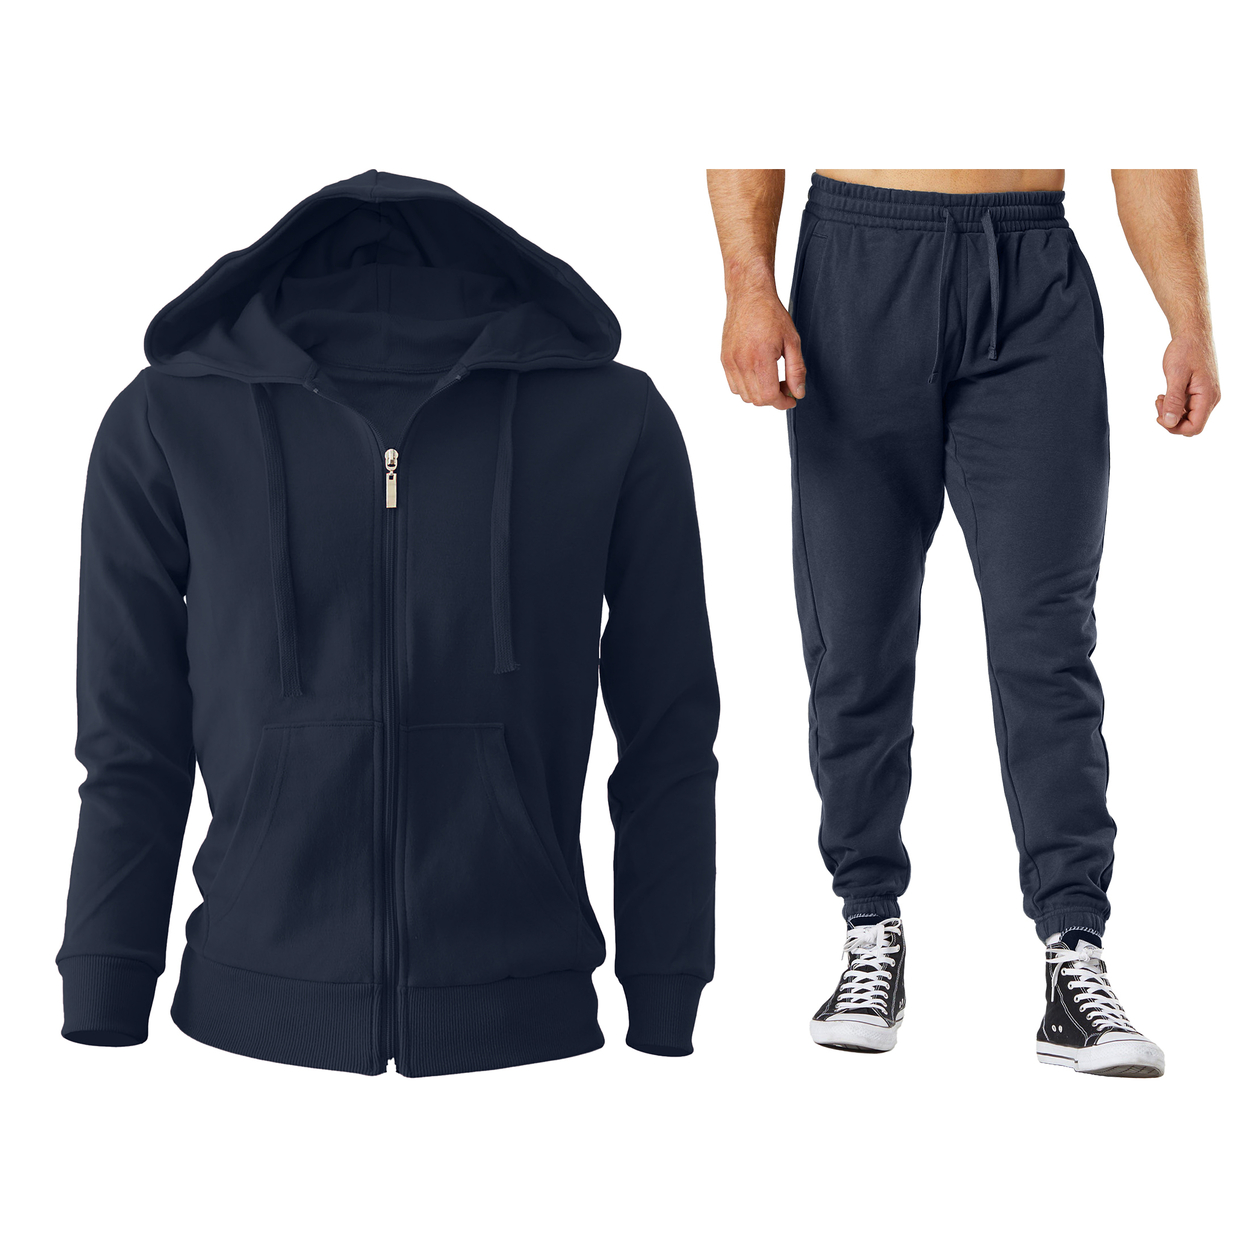 2-Piece: Men's Winter Warm Cozy Athletic Multi-Pockets BIG & TALL Sweatsuit Set - Grey, Medium